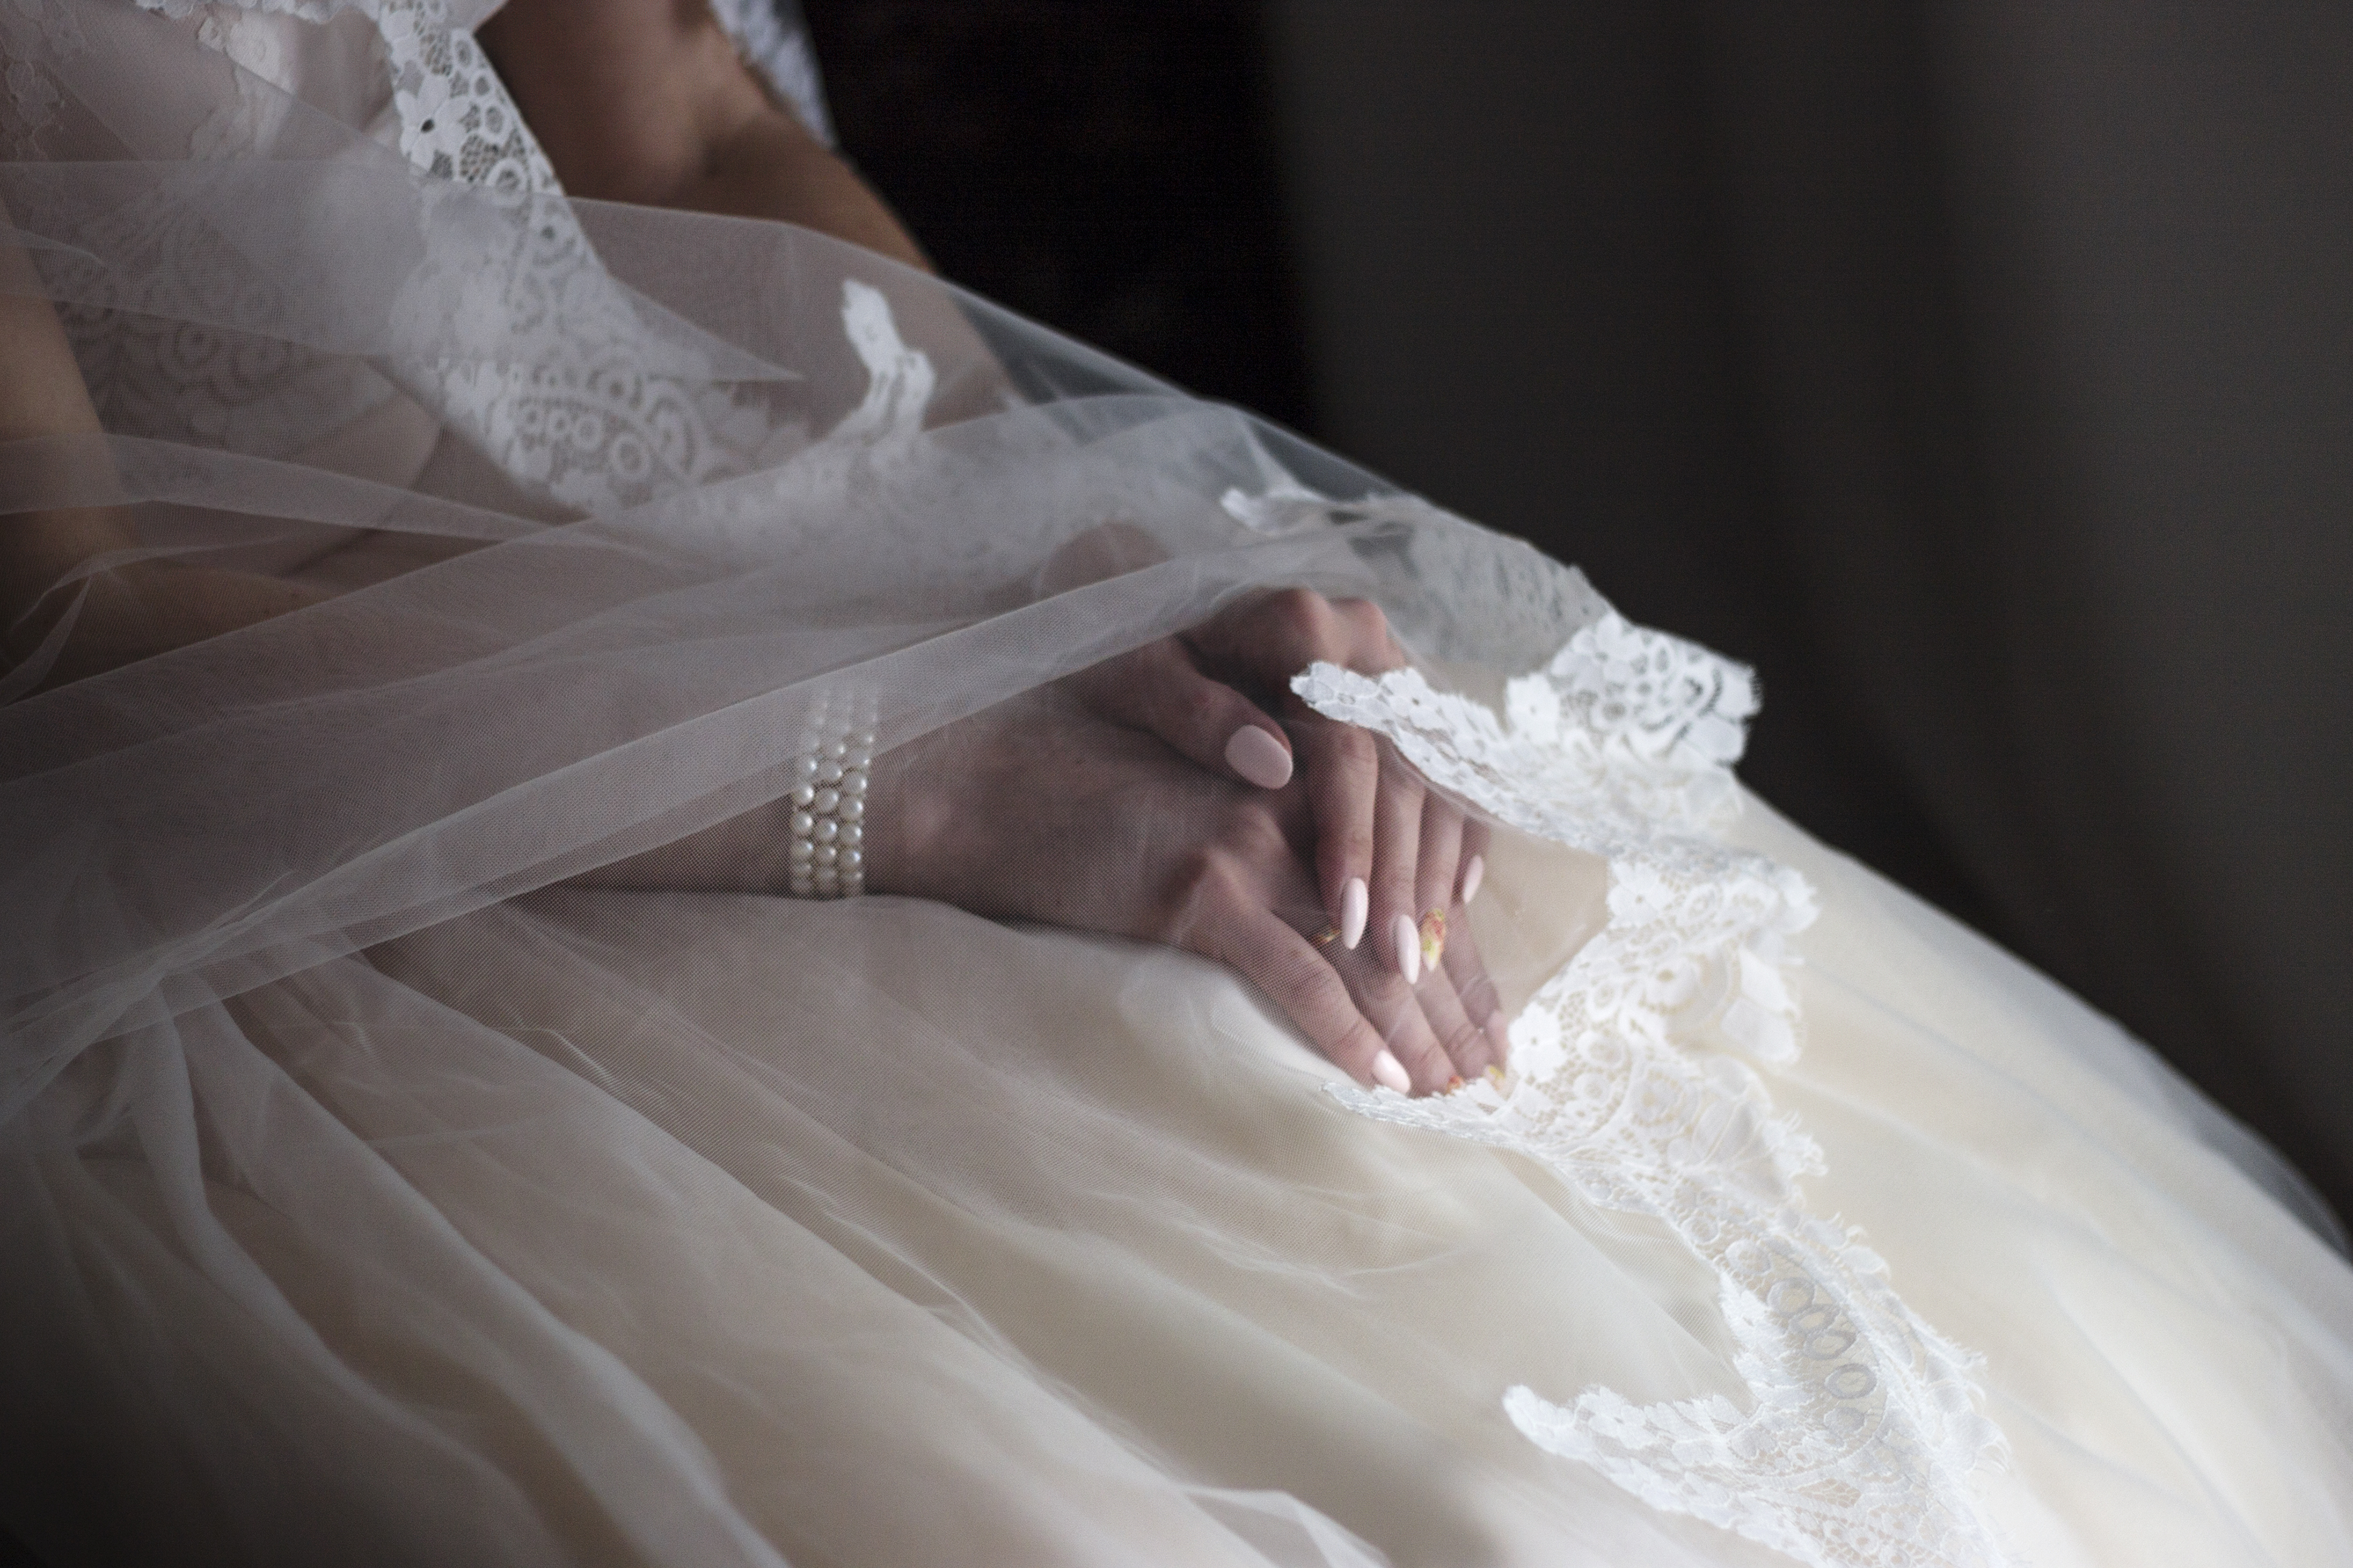 Bride in wedding dress | Source: Shutterstock